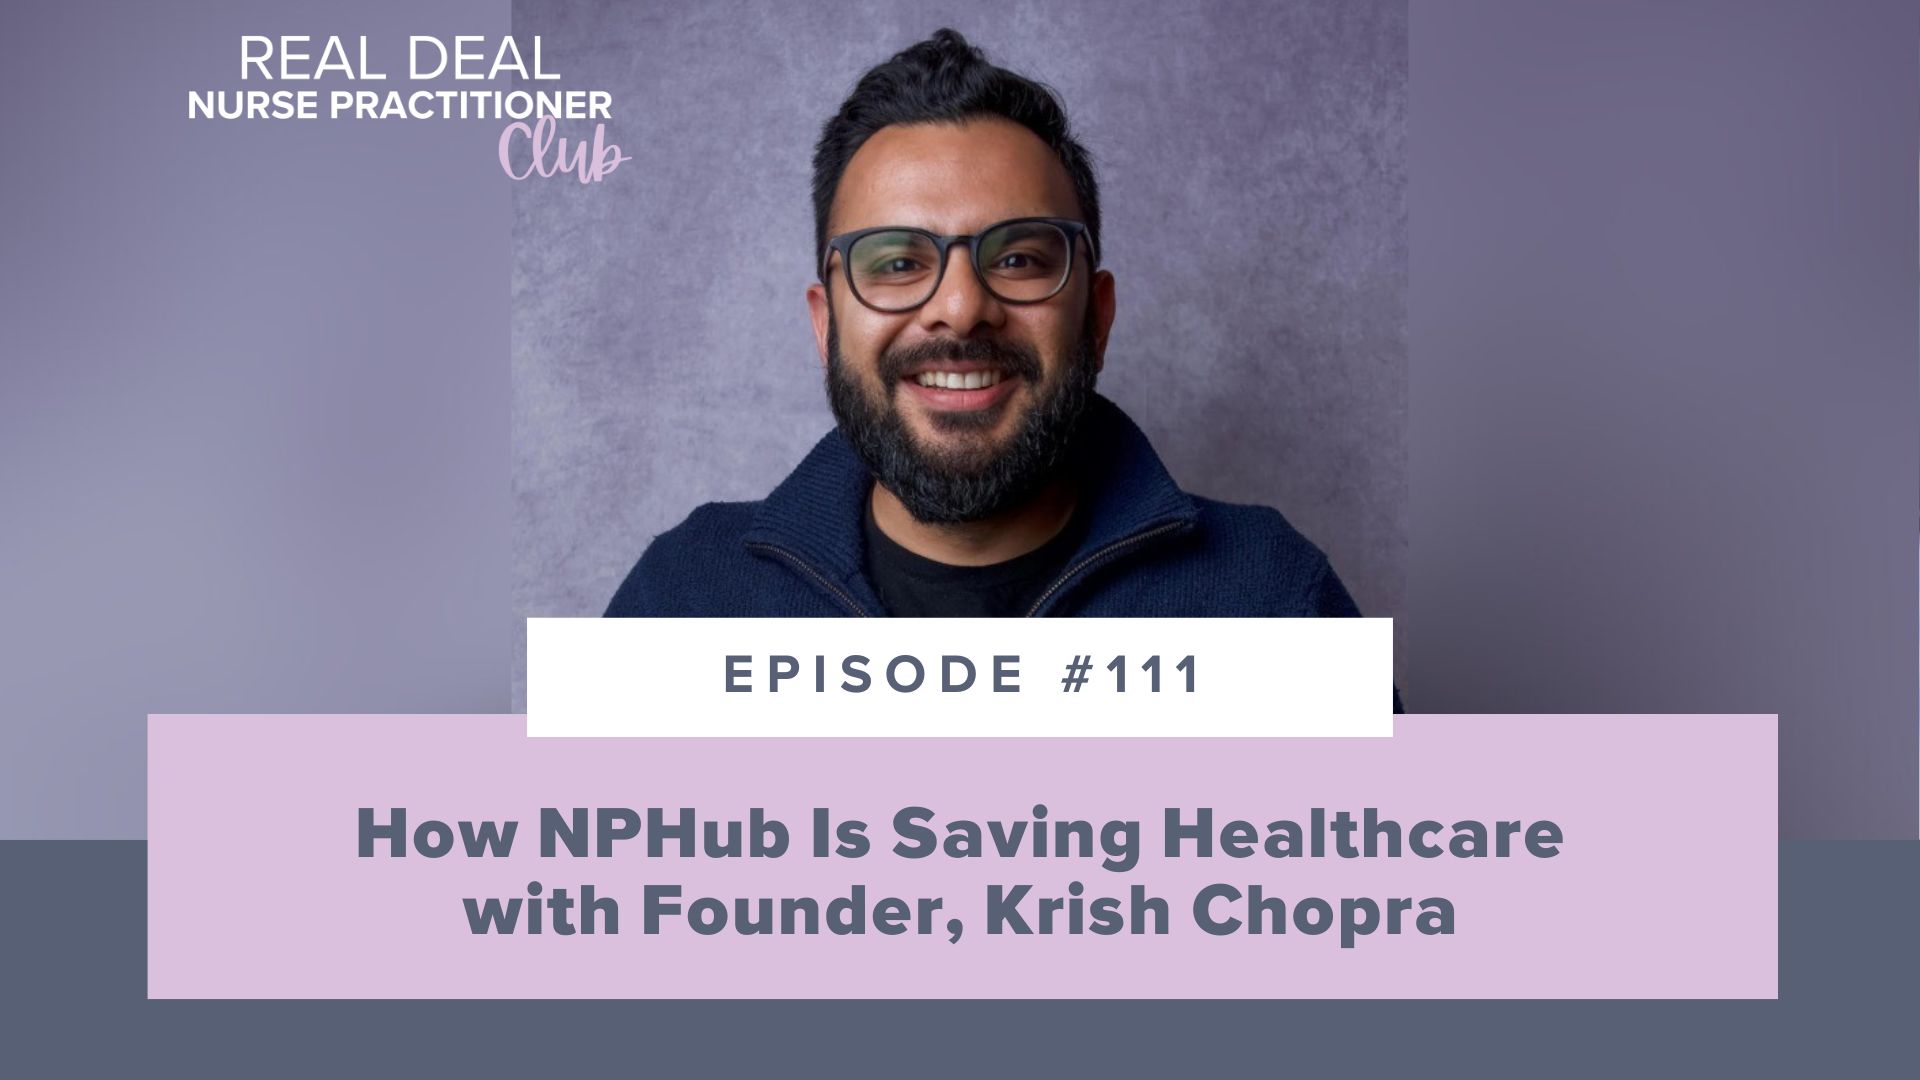 SMNP Blog - Episode #111: How NPHub Is Saving Healthcare with Founder, Krish Chopra